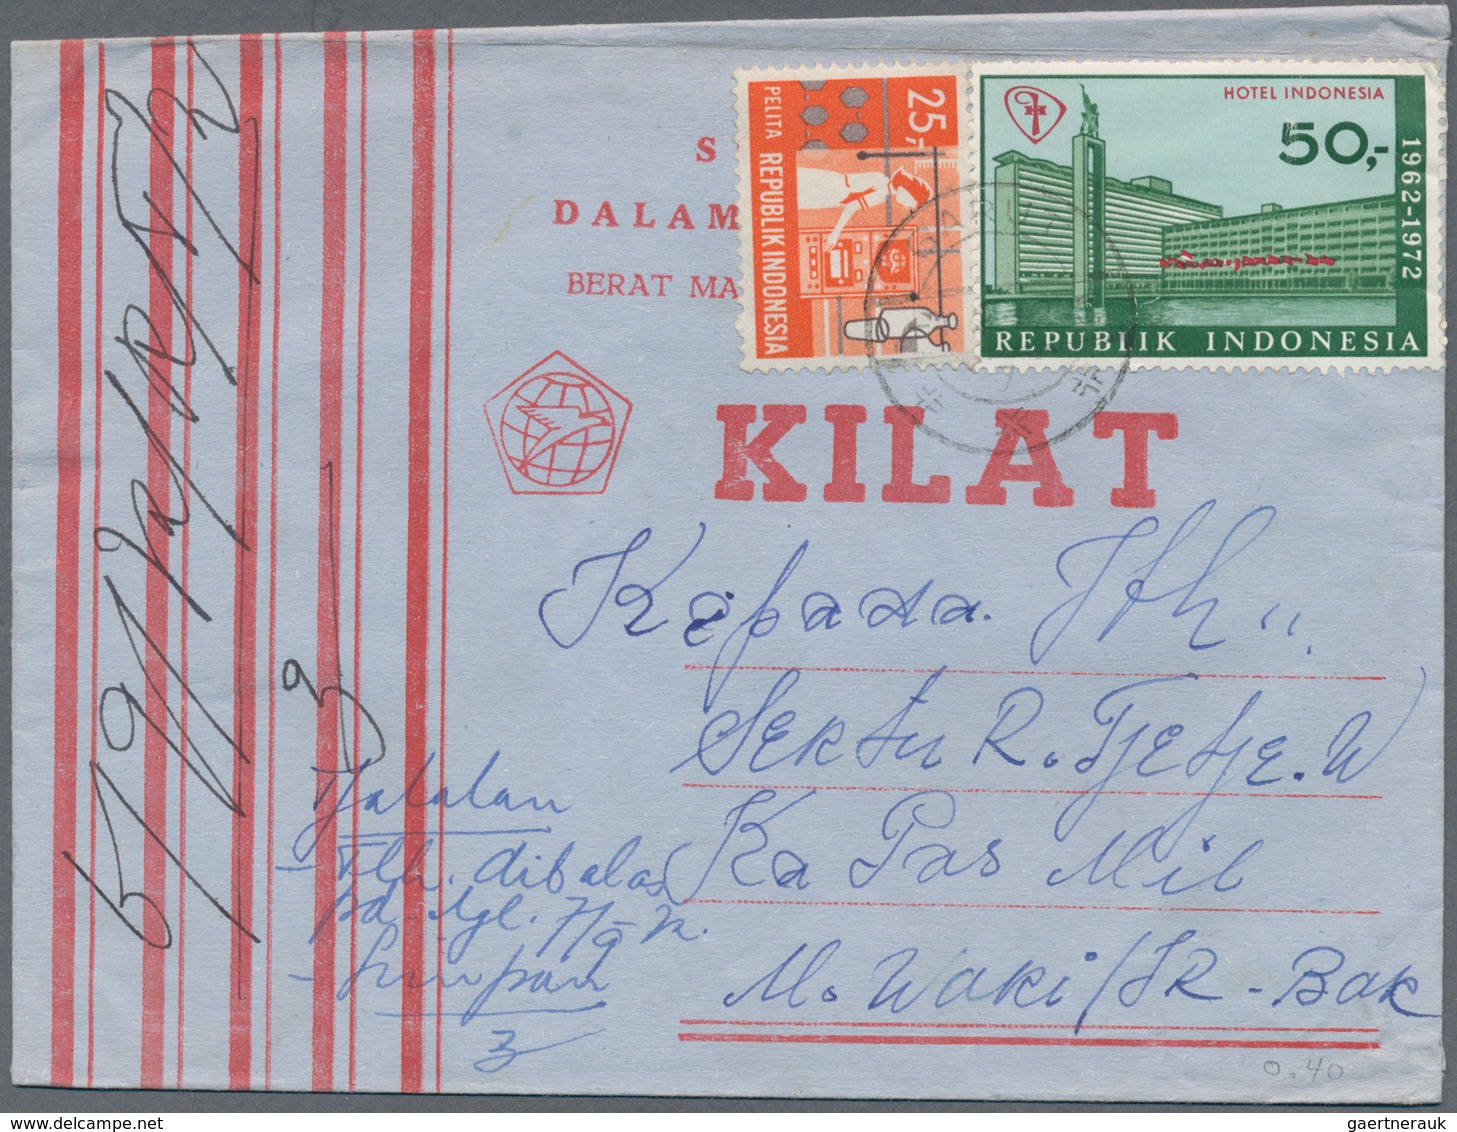 Indonesien: 1949/97 (ca.), stationery envelopes (warkat pos / postblad) specialized stock: 10 S. (mi